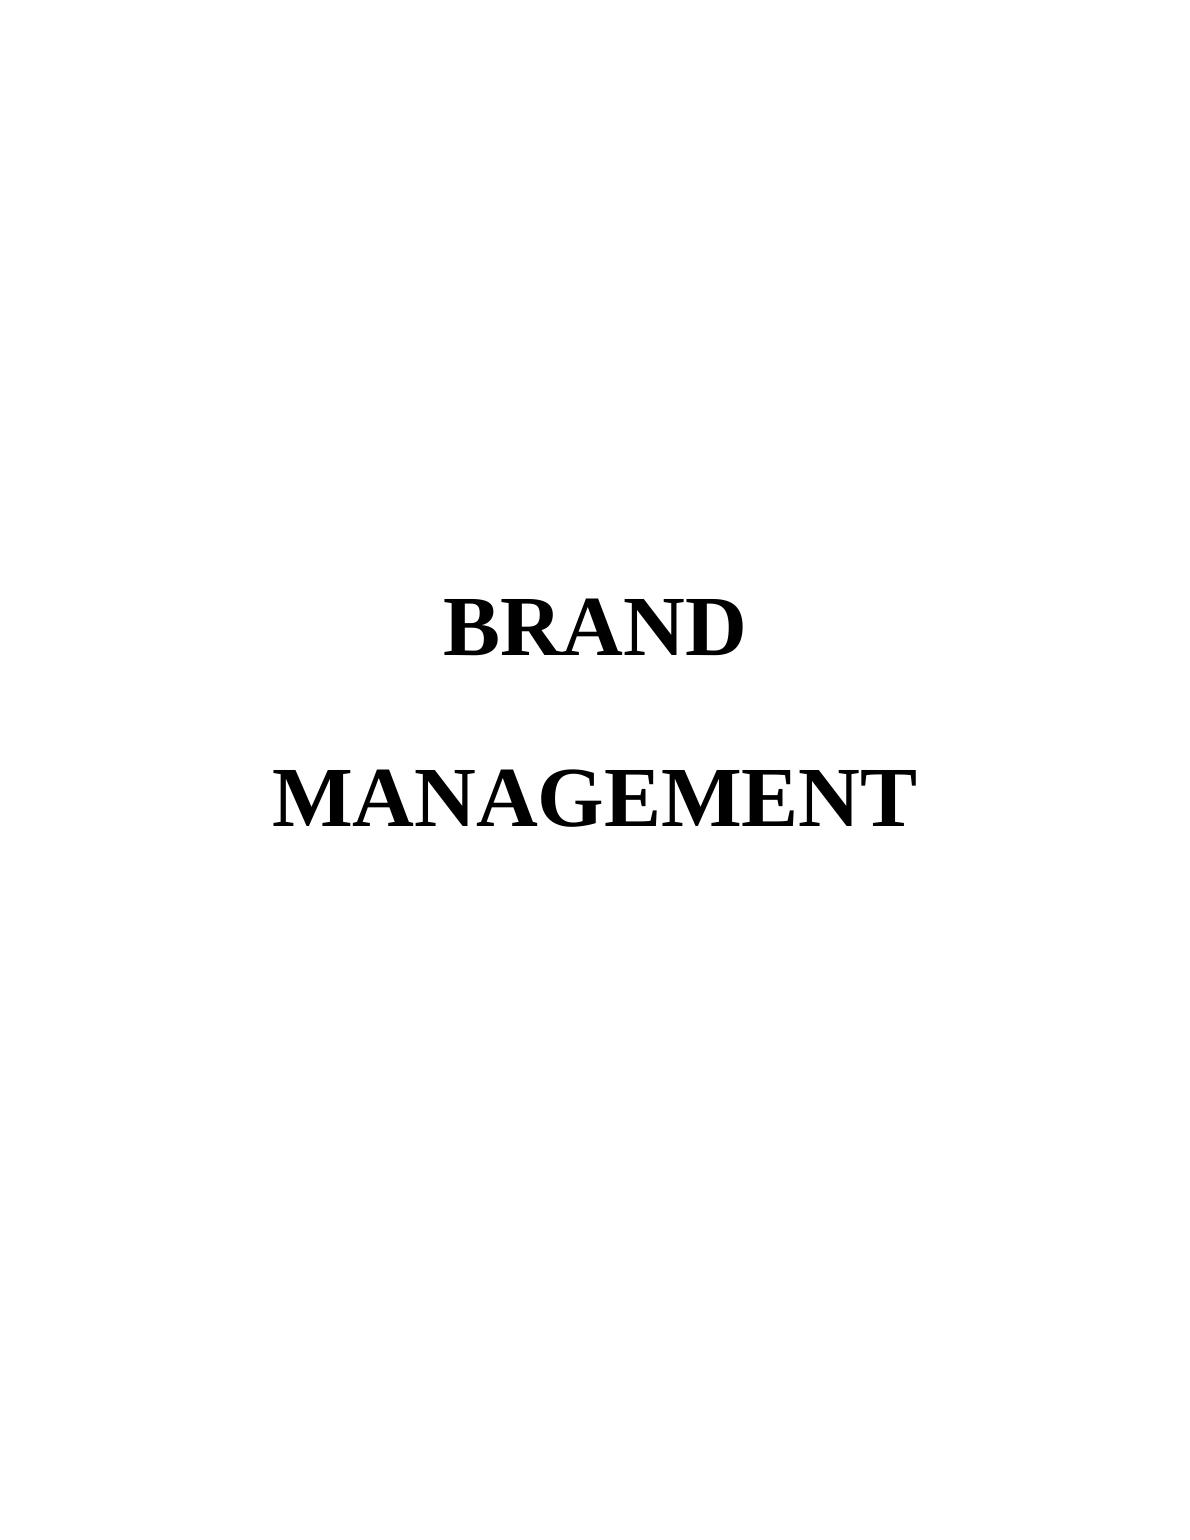 Brand Management Assignment Solution - Doc_1